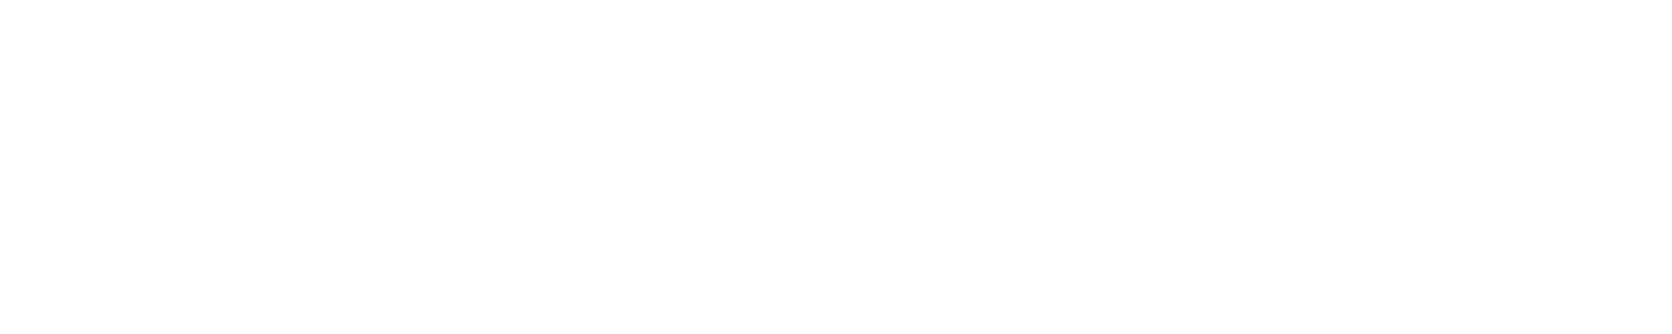 Highrise